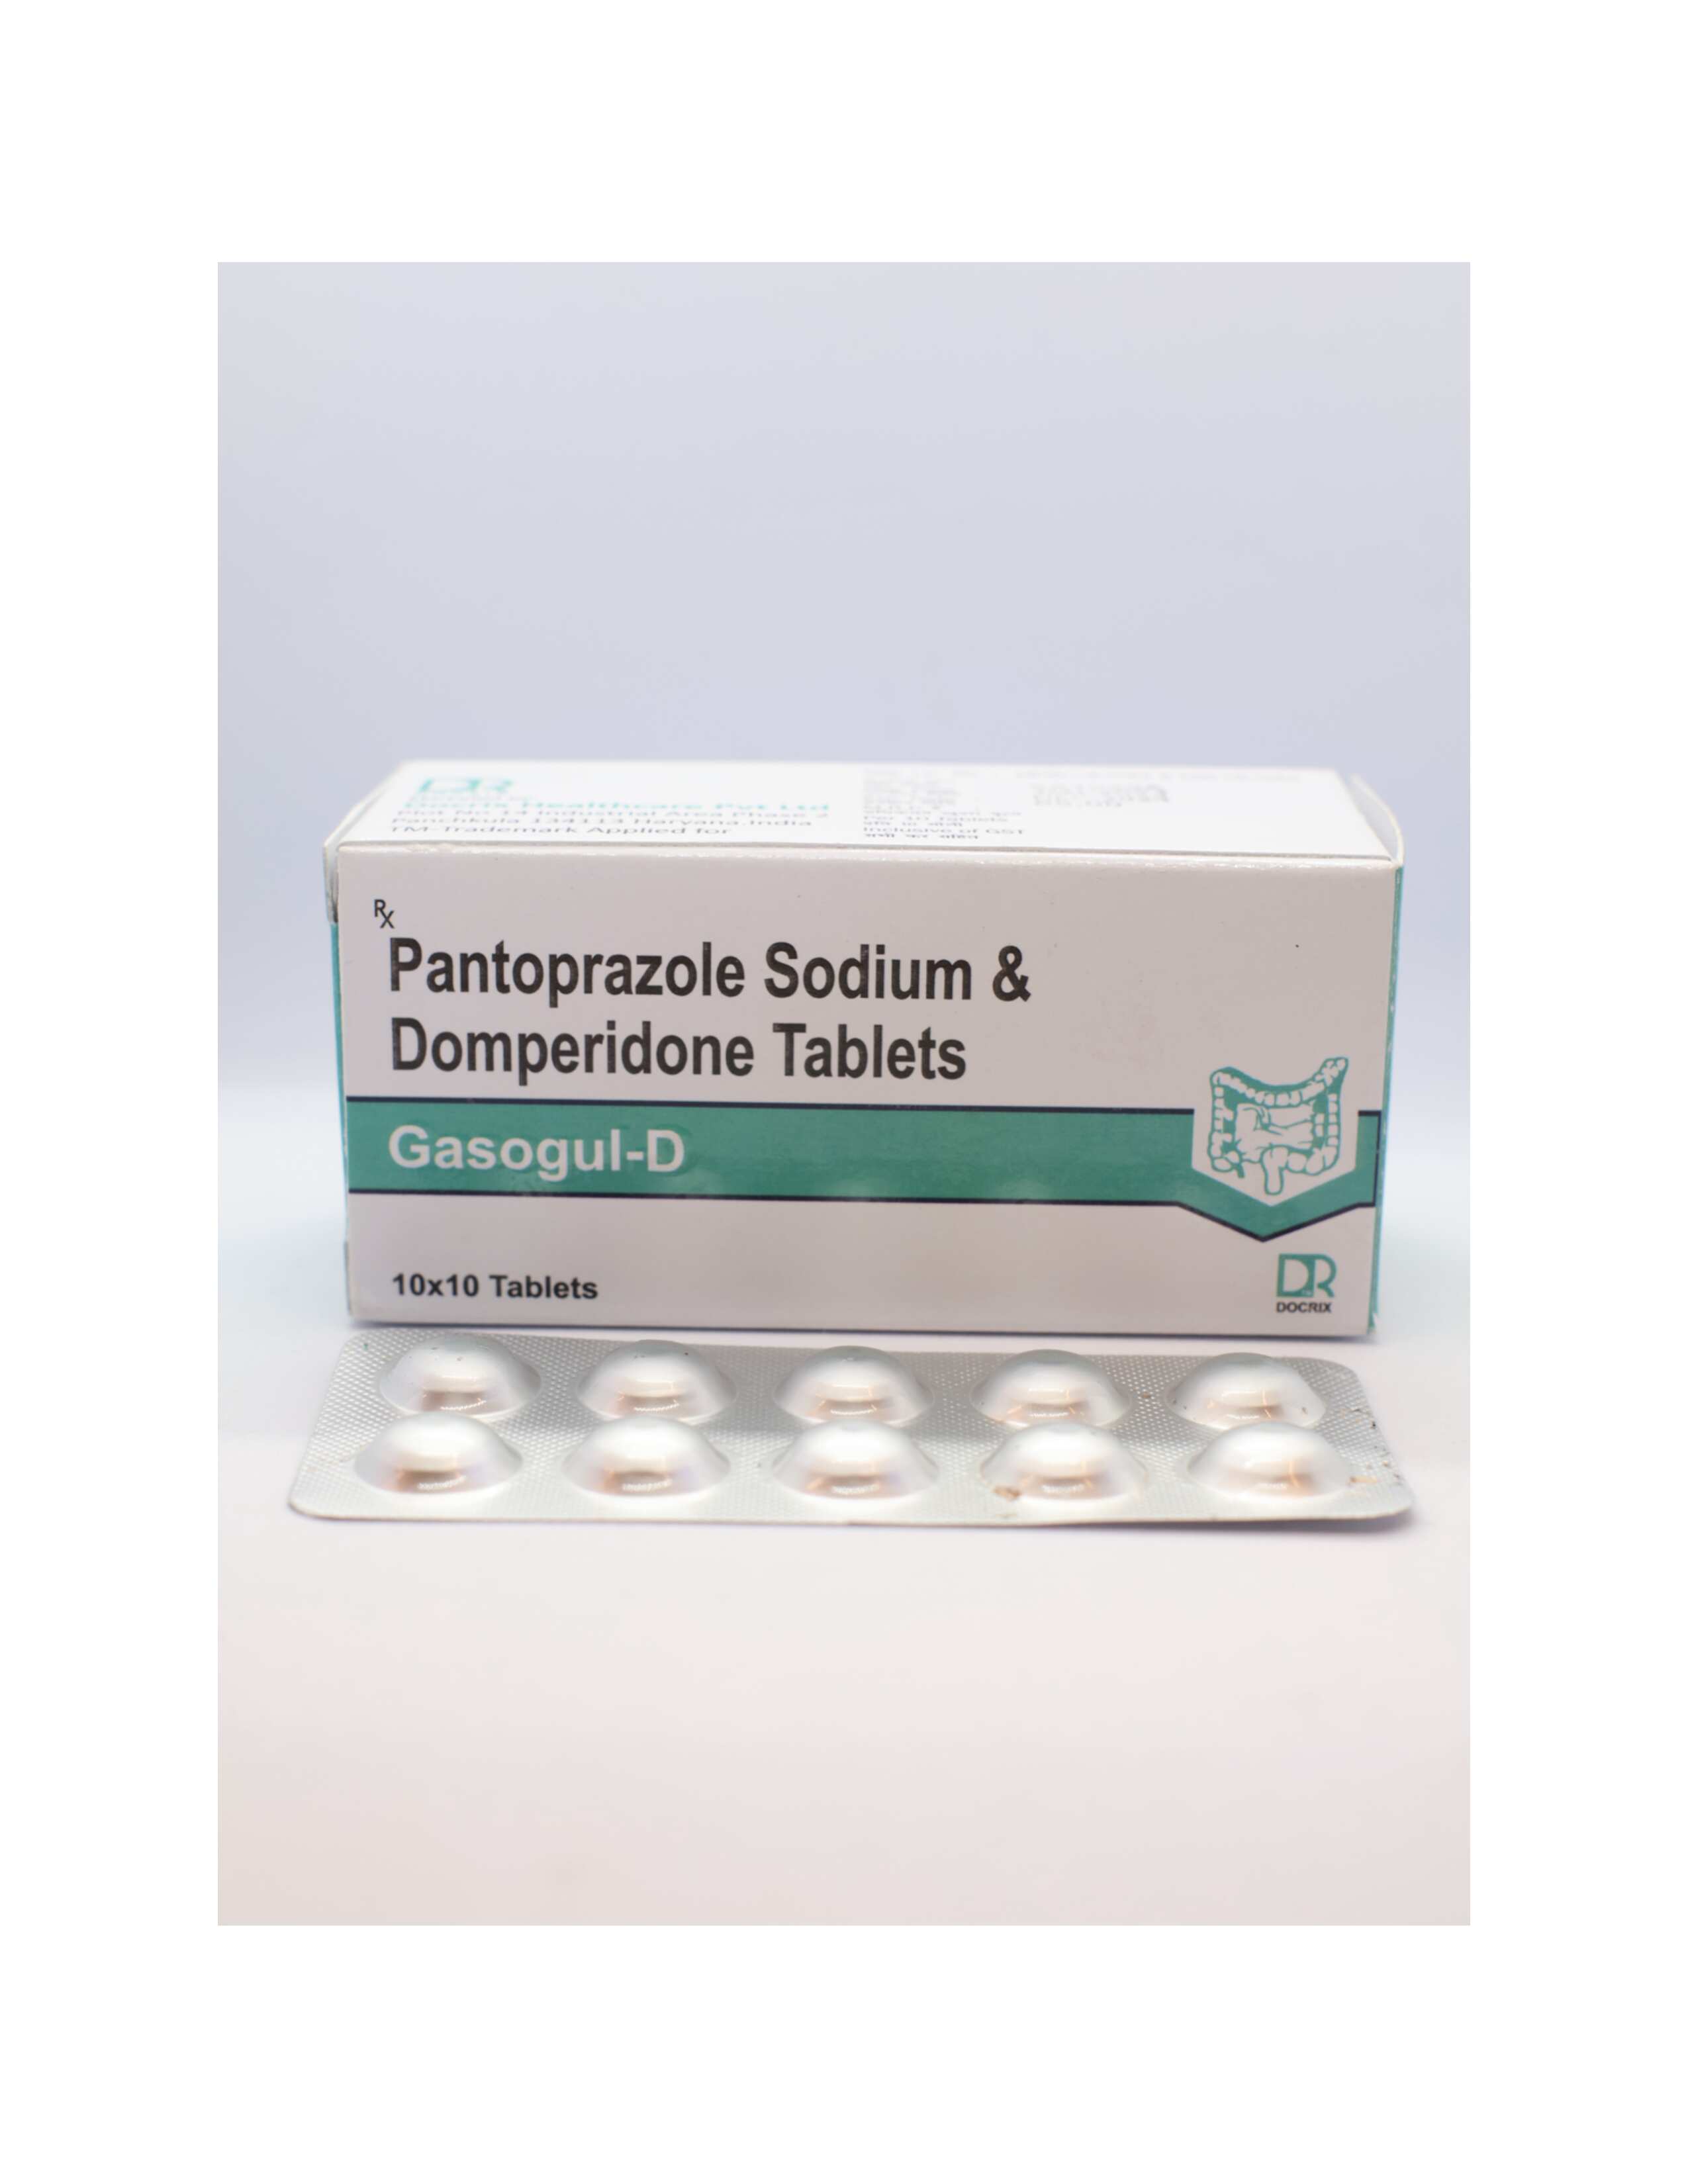 Product Name: Gasogul D, Compositions of Gasogul D are Pantoprazole Sodium & Domperidone Tablets - Docrix Healthcare